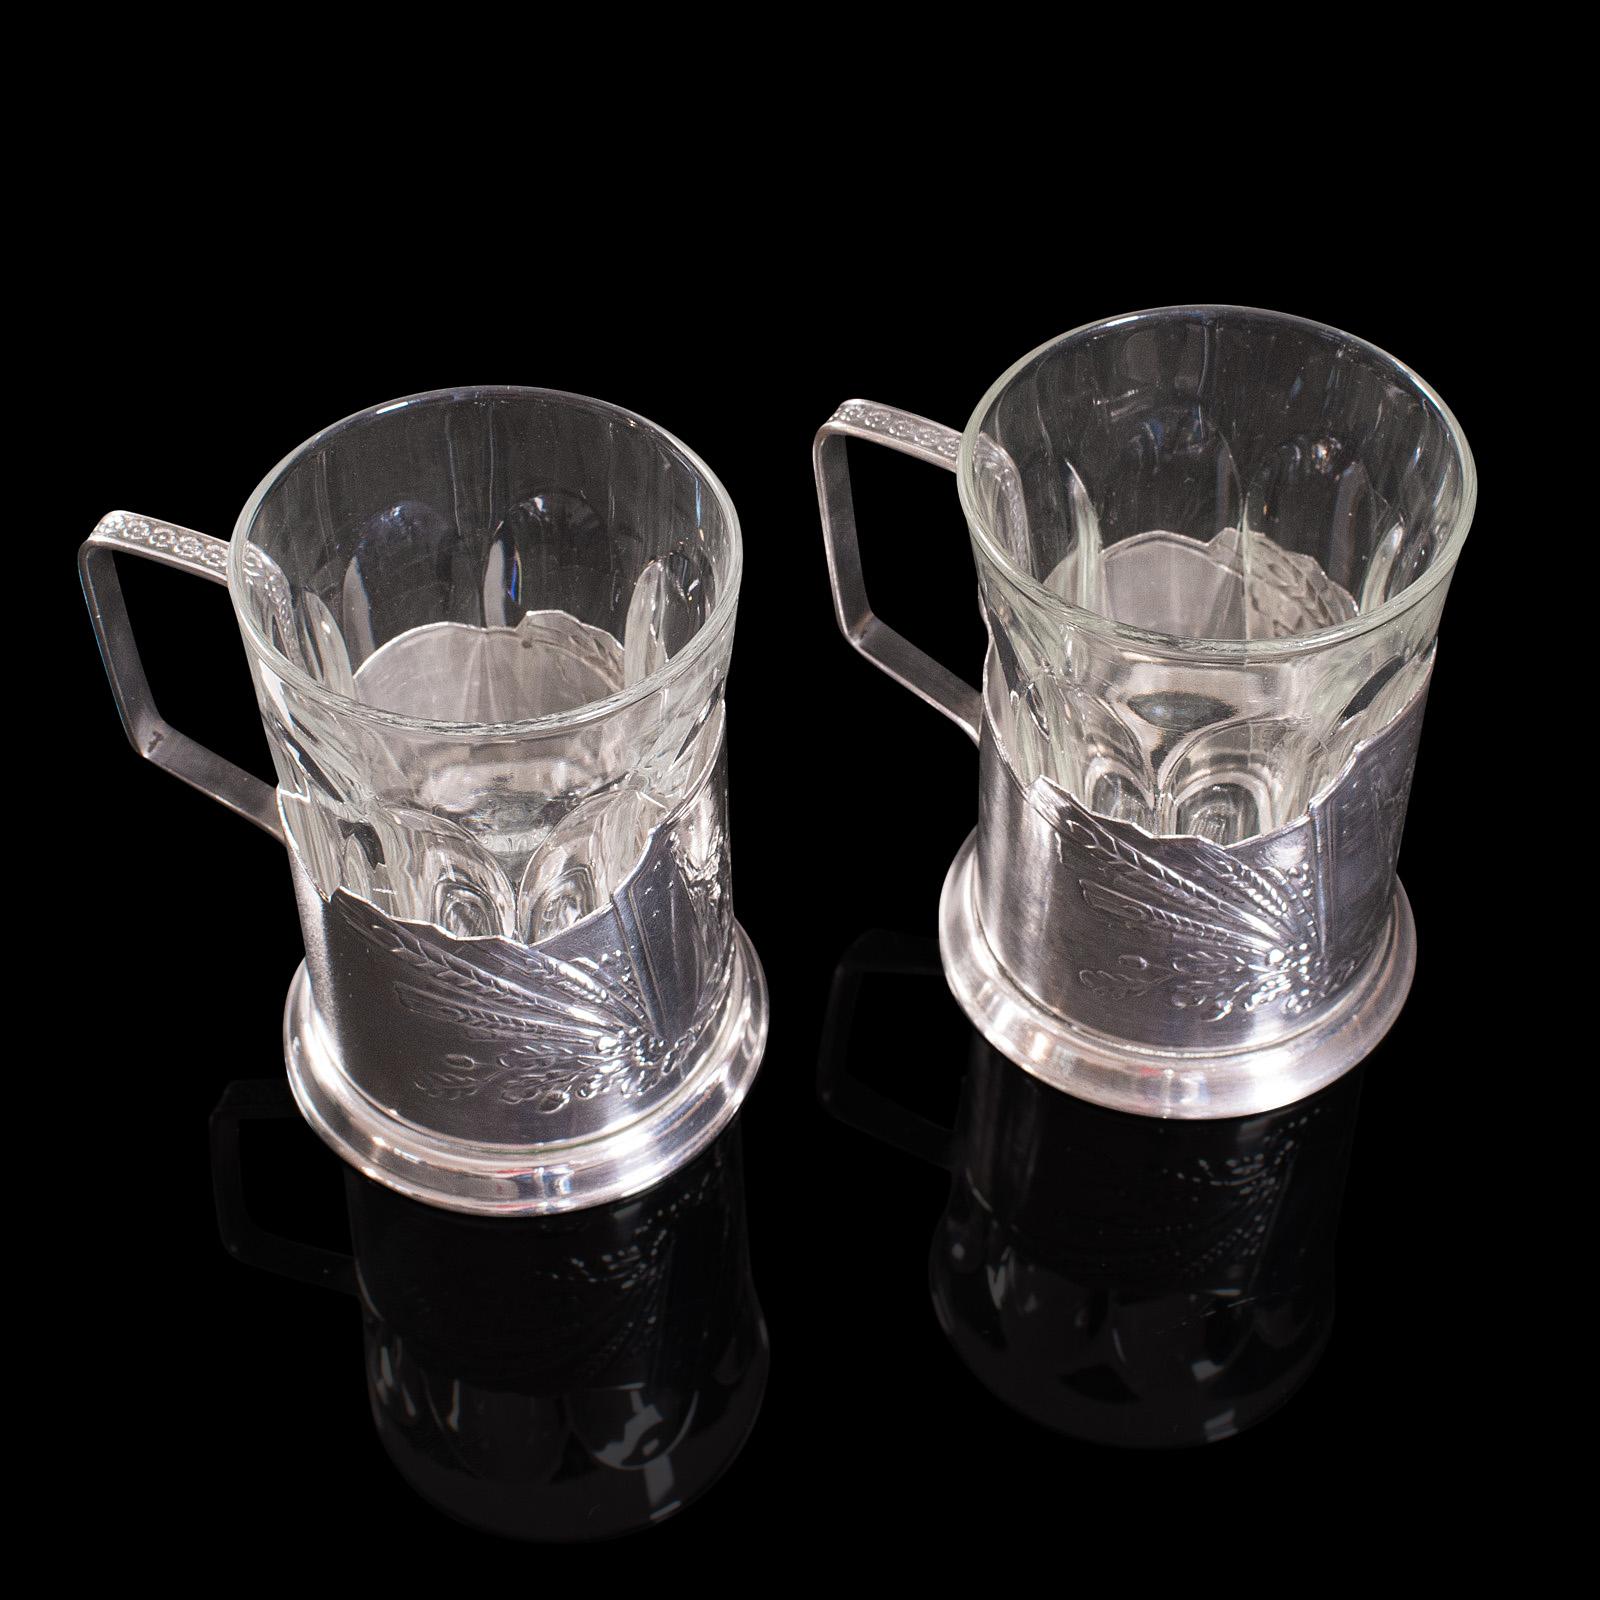 Pair of, Vintage Podstakannik Cups, Russian, Silver Plate, Ussr, Sputnik, 1950 In Good Condition For Sale In Hele, Devon, GB